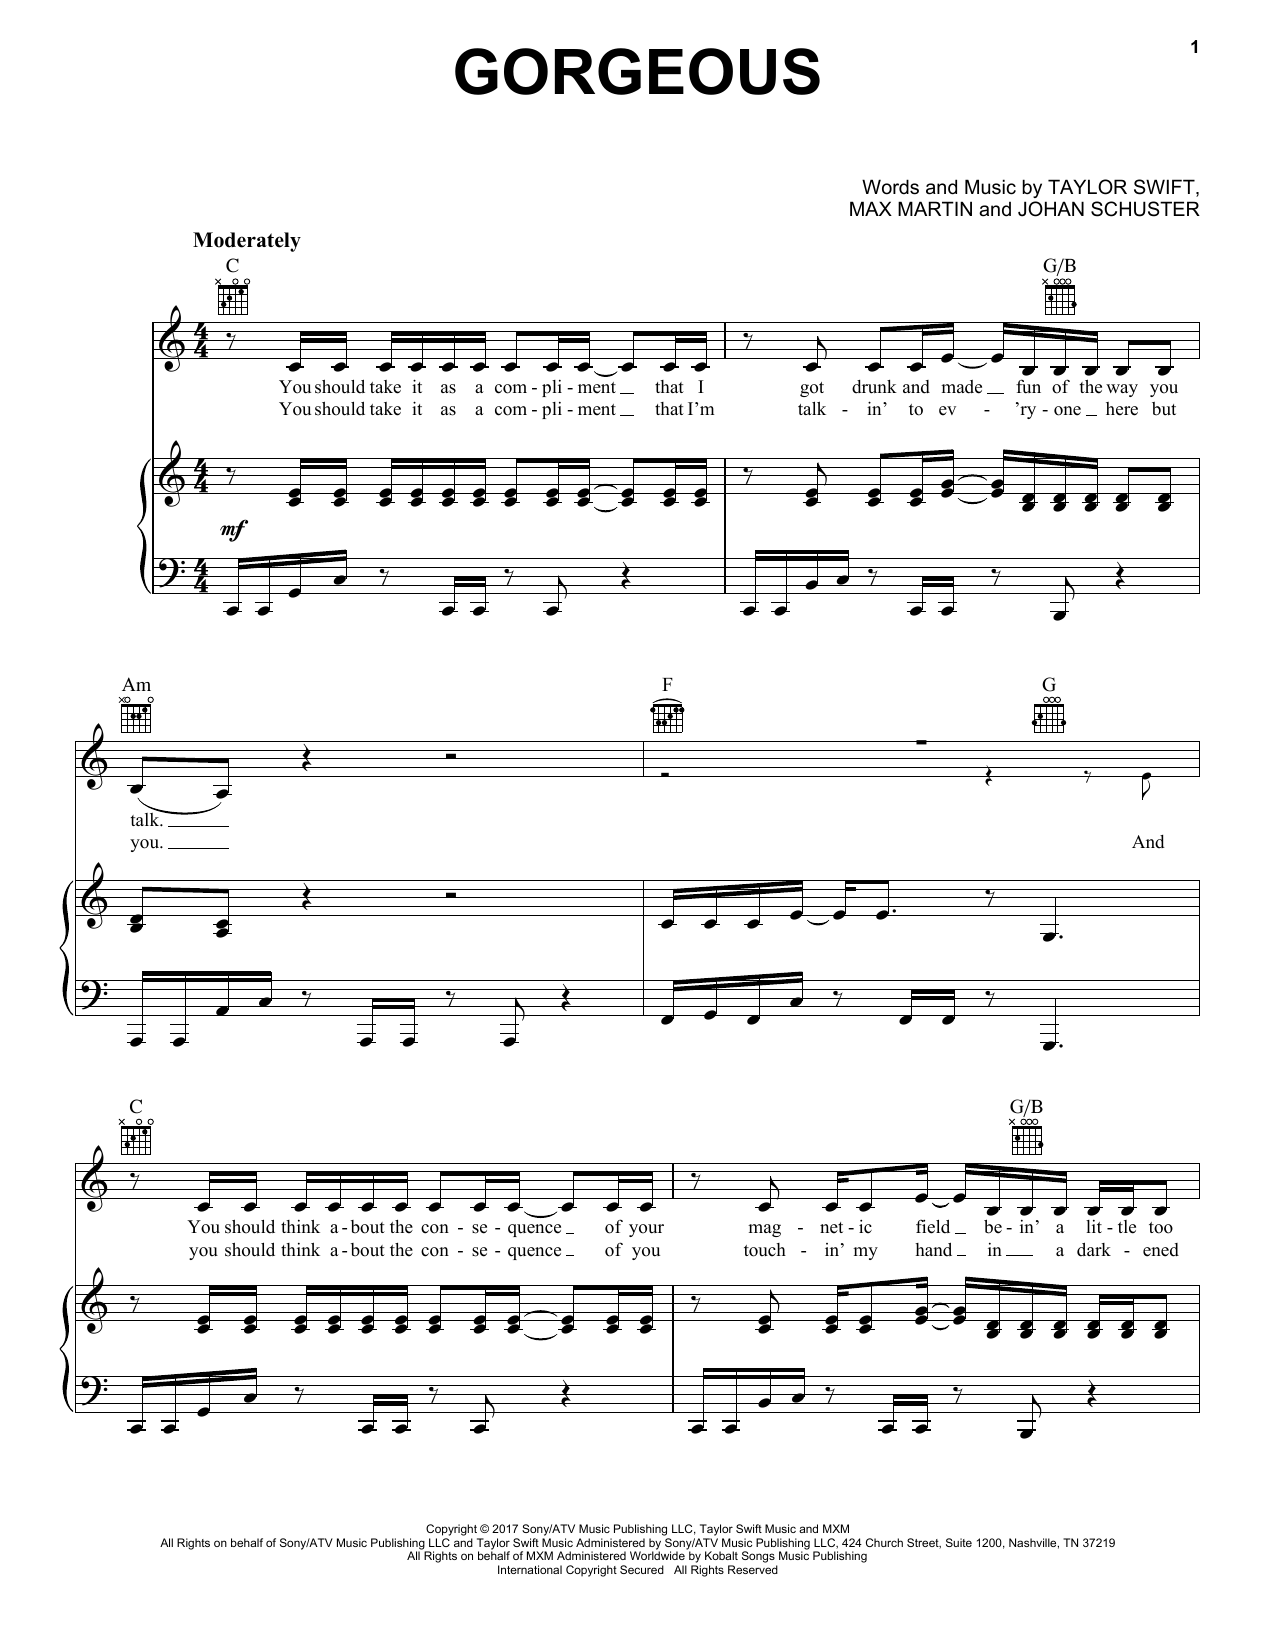 Taylor Swift Gorgeous Sheet Music Notes & Chords for Lyrics & Chords - Download or Print PDF